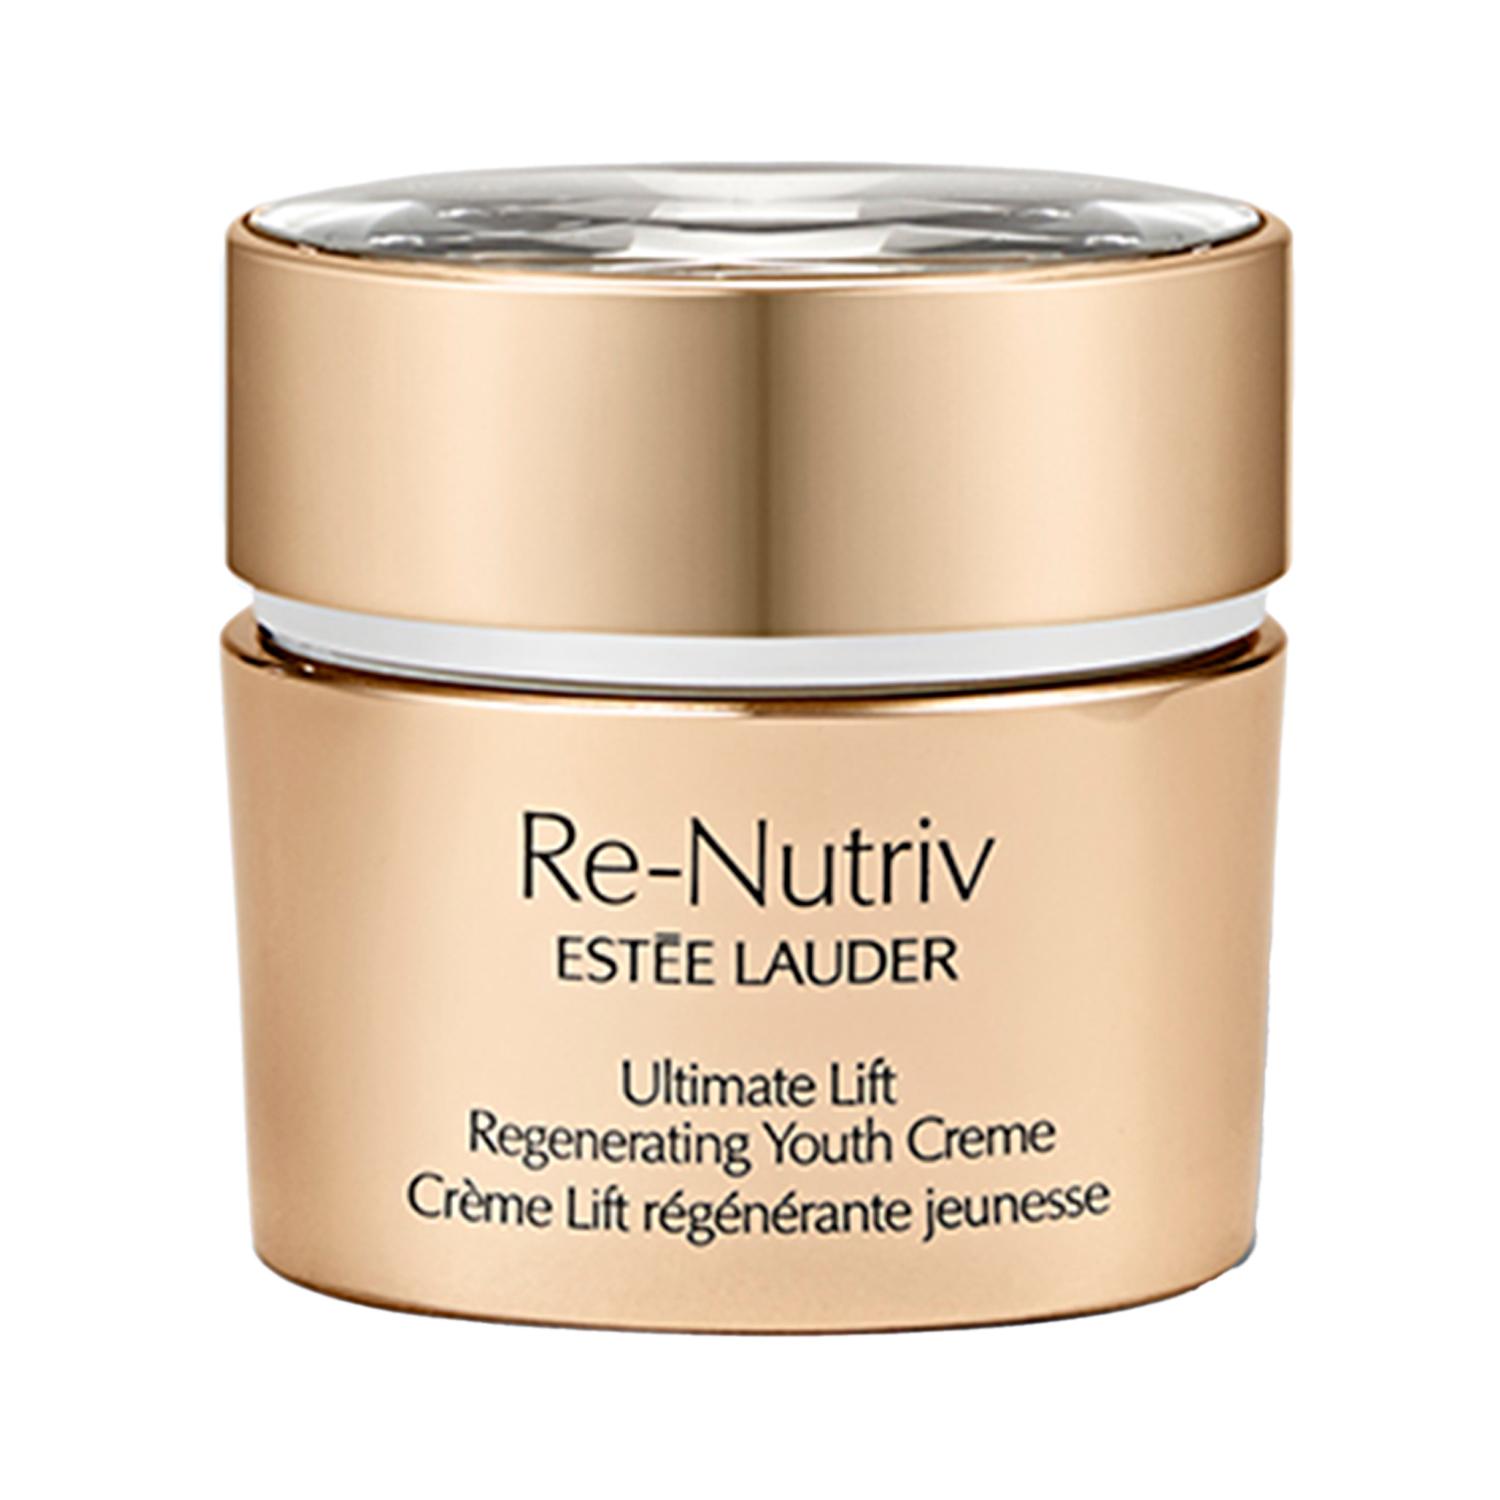 Estee Lauder Re-Nutriv Ultimate Lift Regenerating Youth Moisturizer Creme (50 ml)